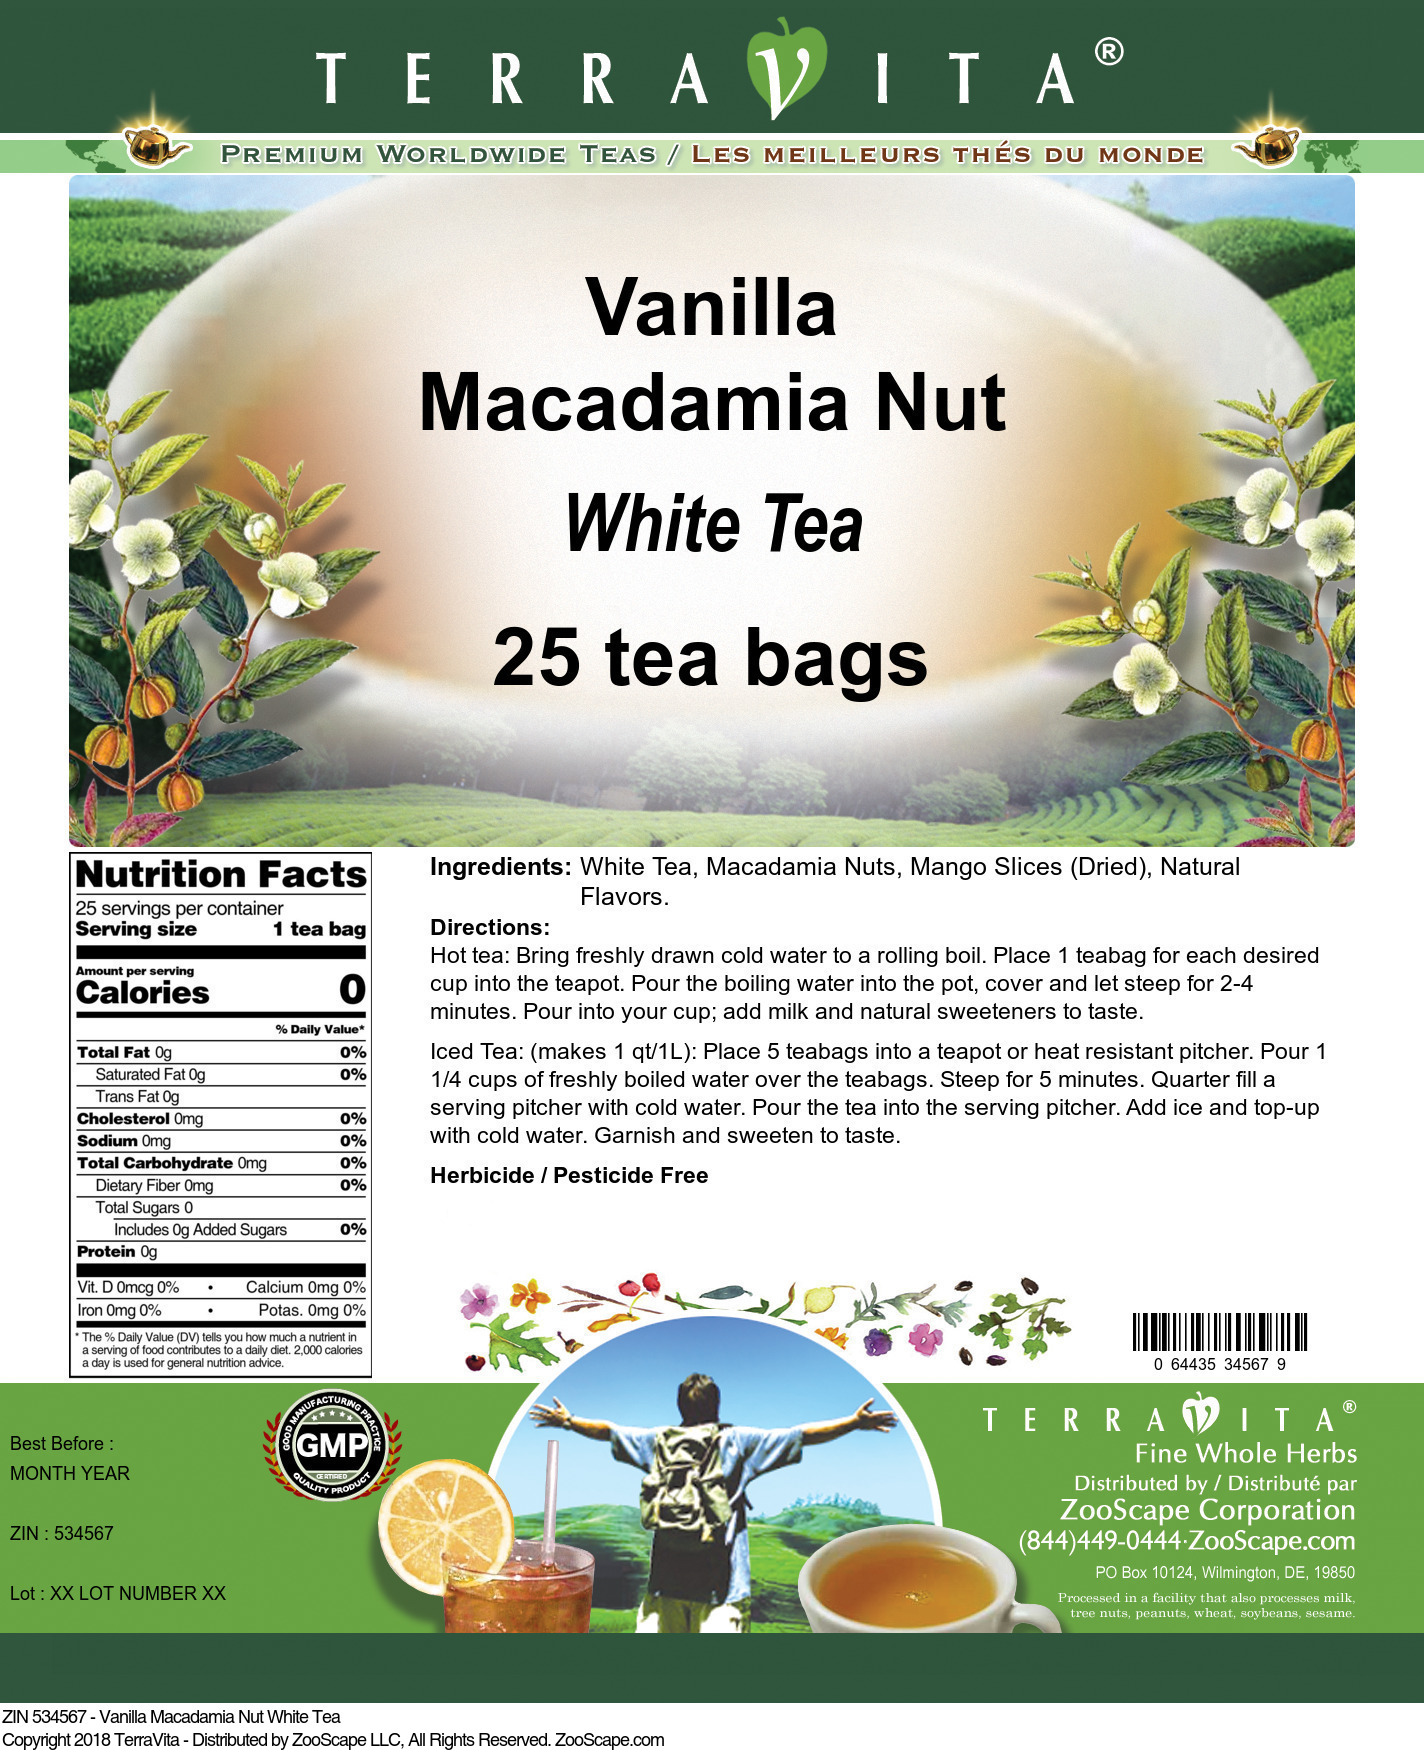 Vanilla Macadamia Nut White Tea - Label